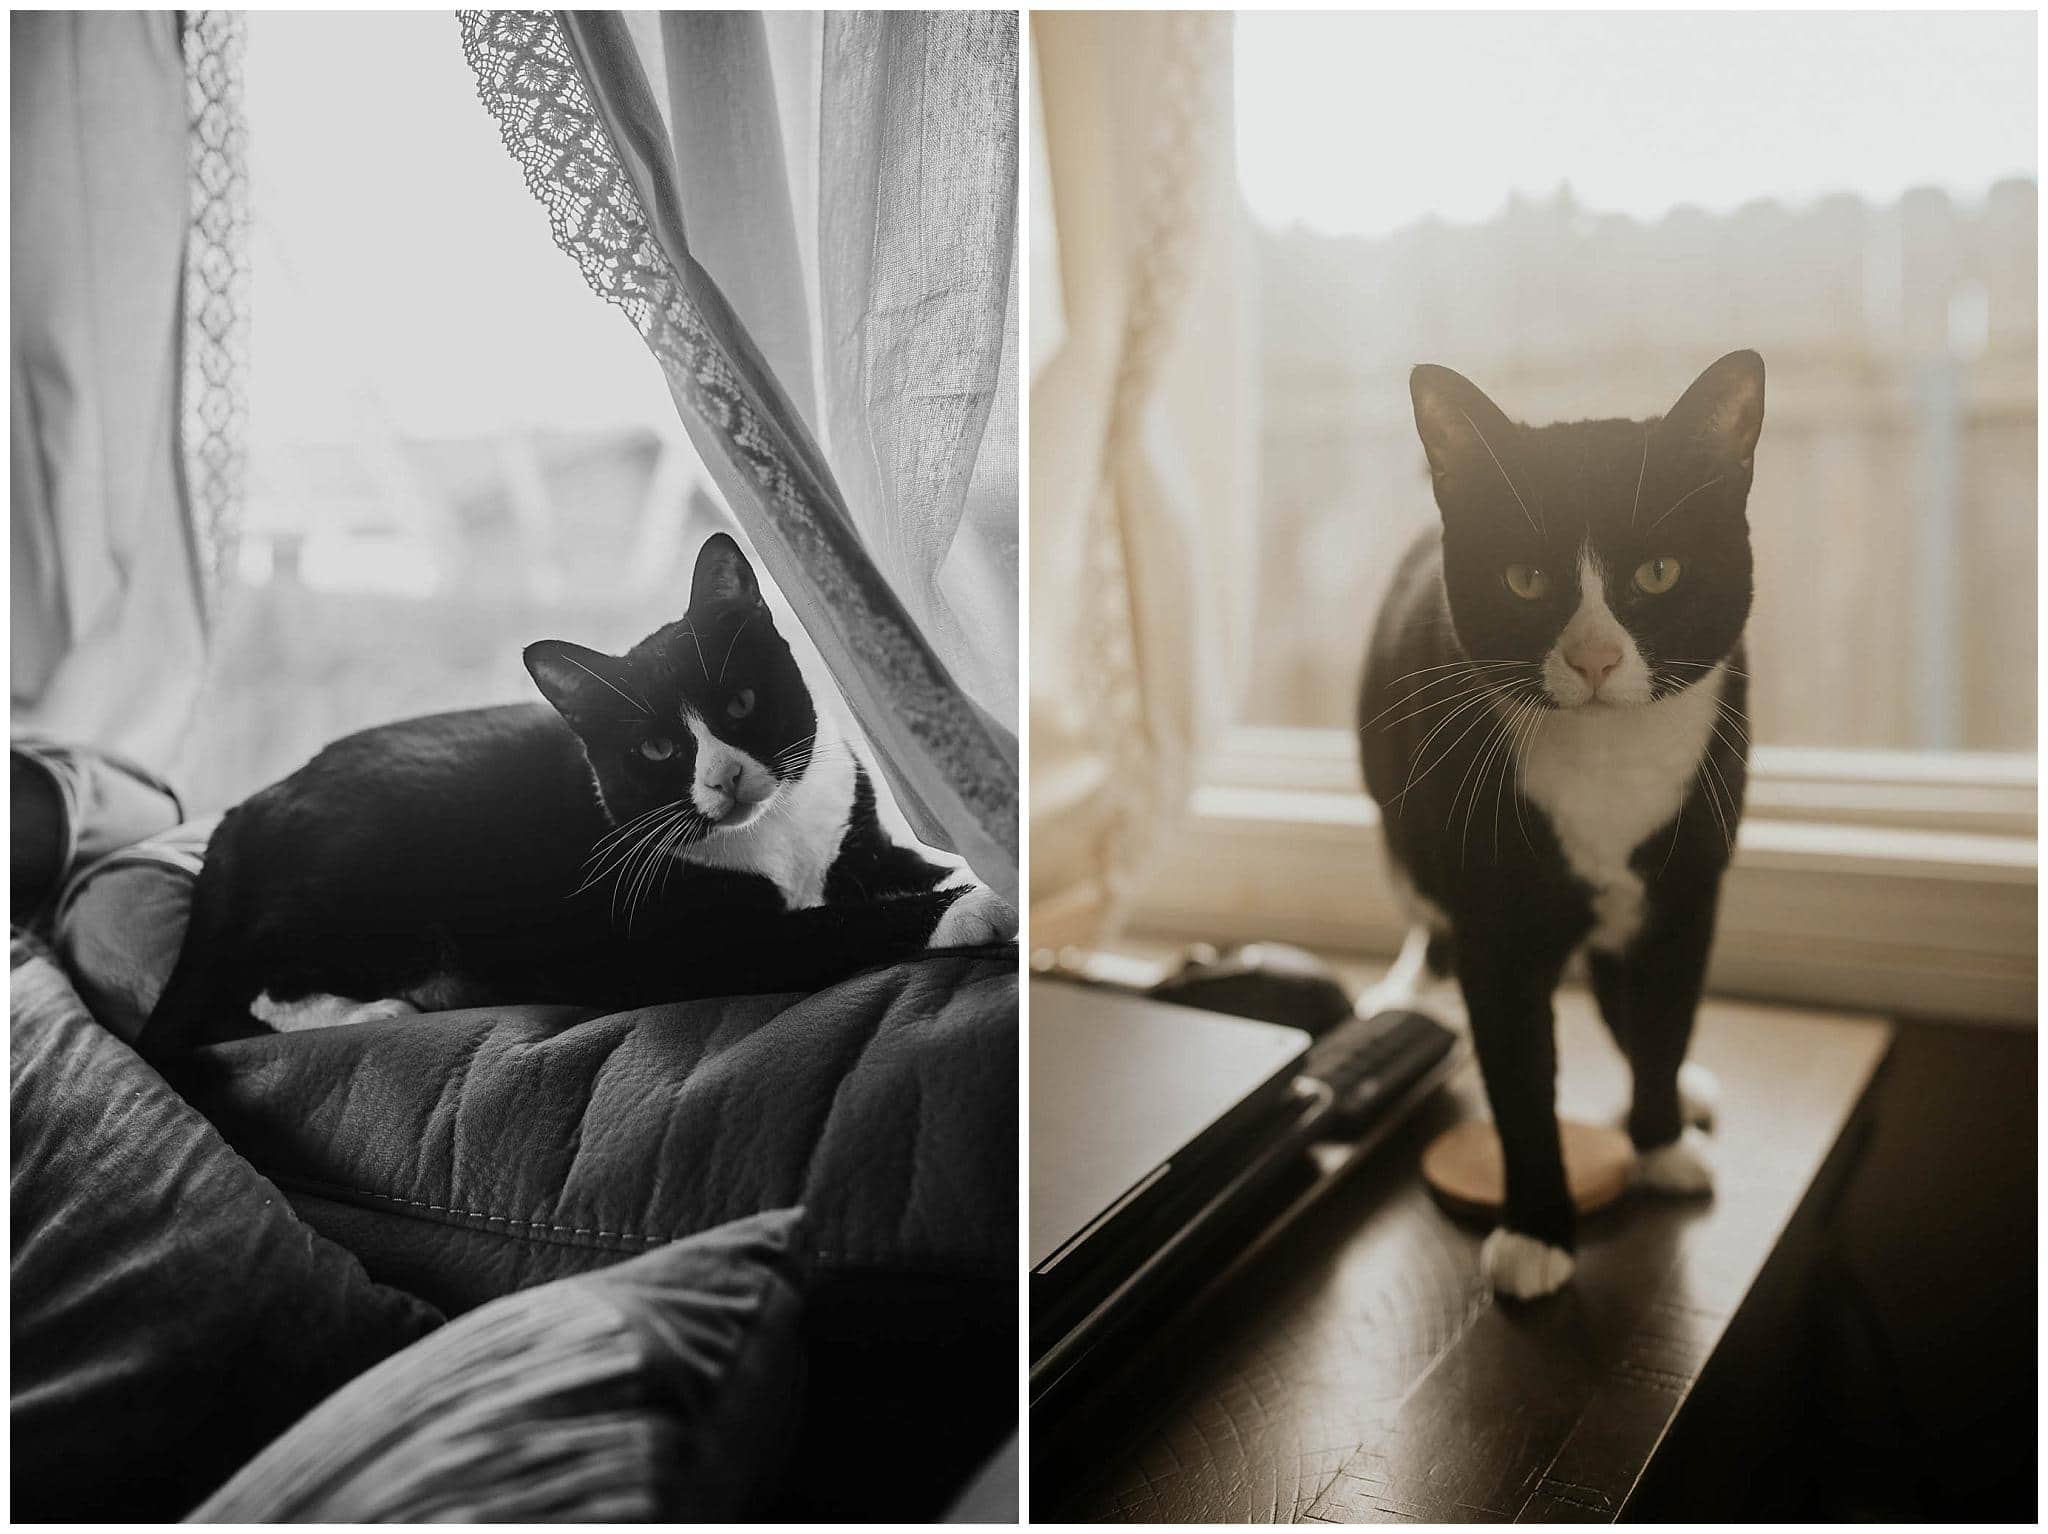 Tuxedo cat sitting near window - Cinebloom lens filter